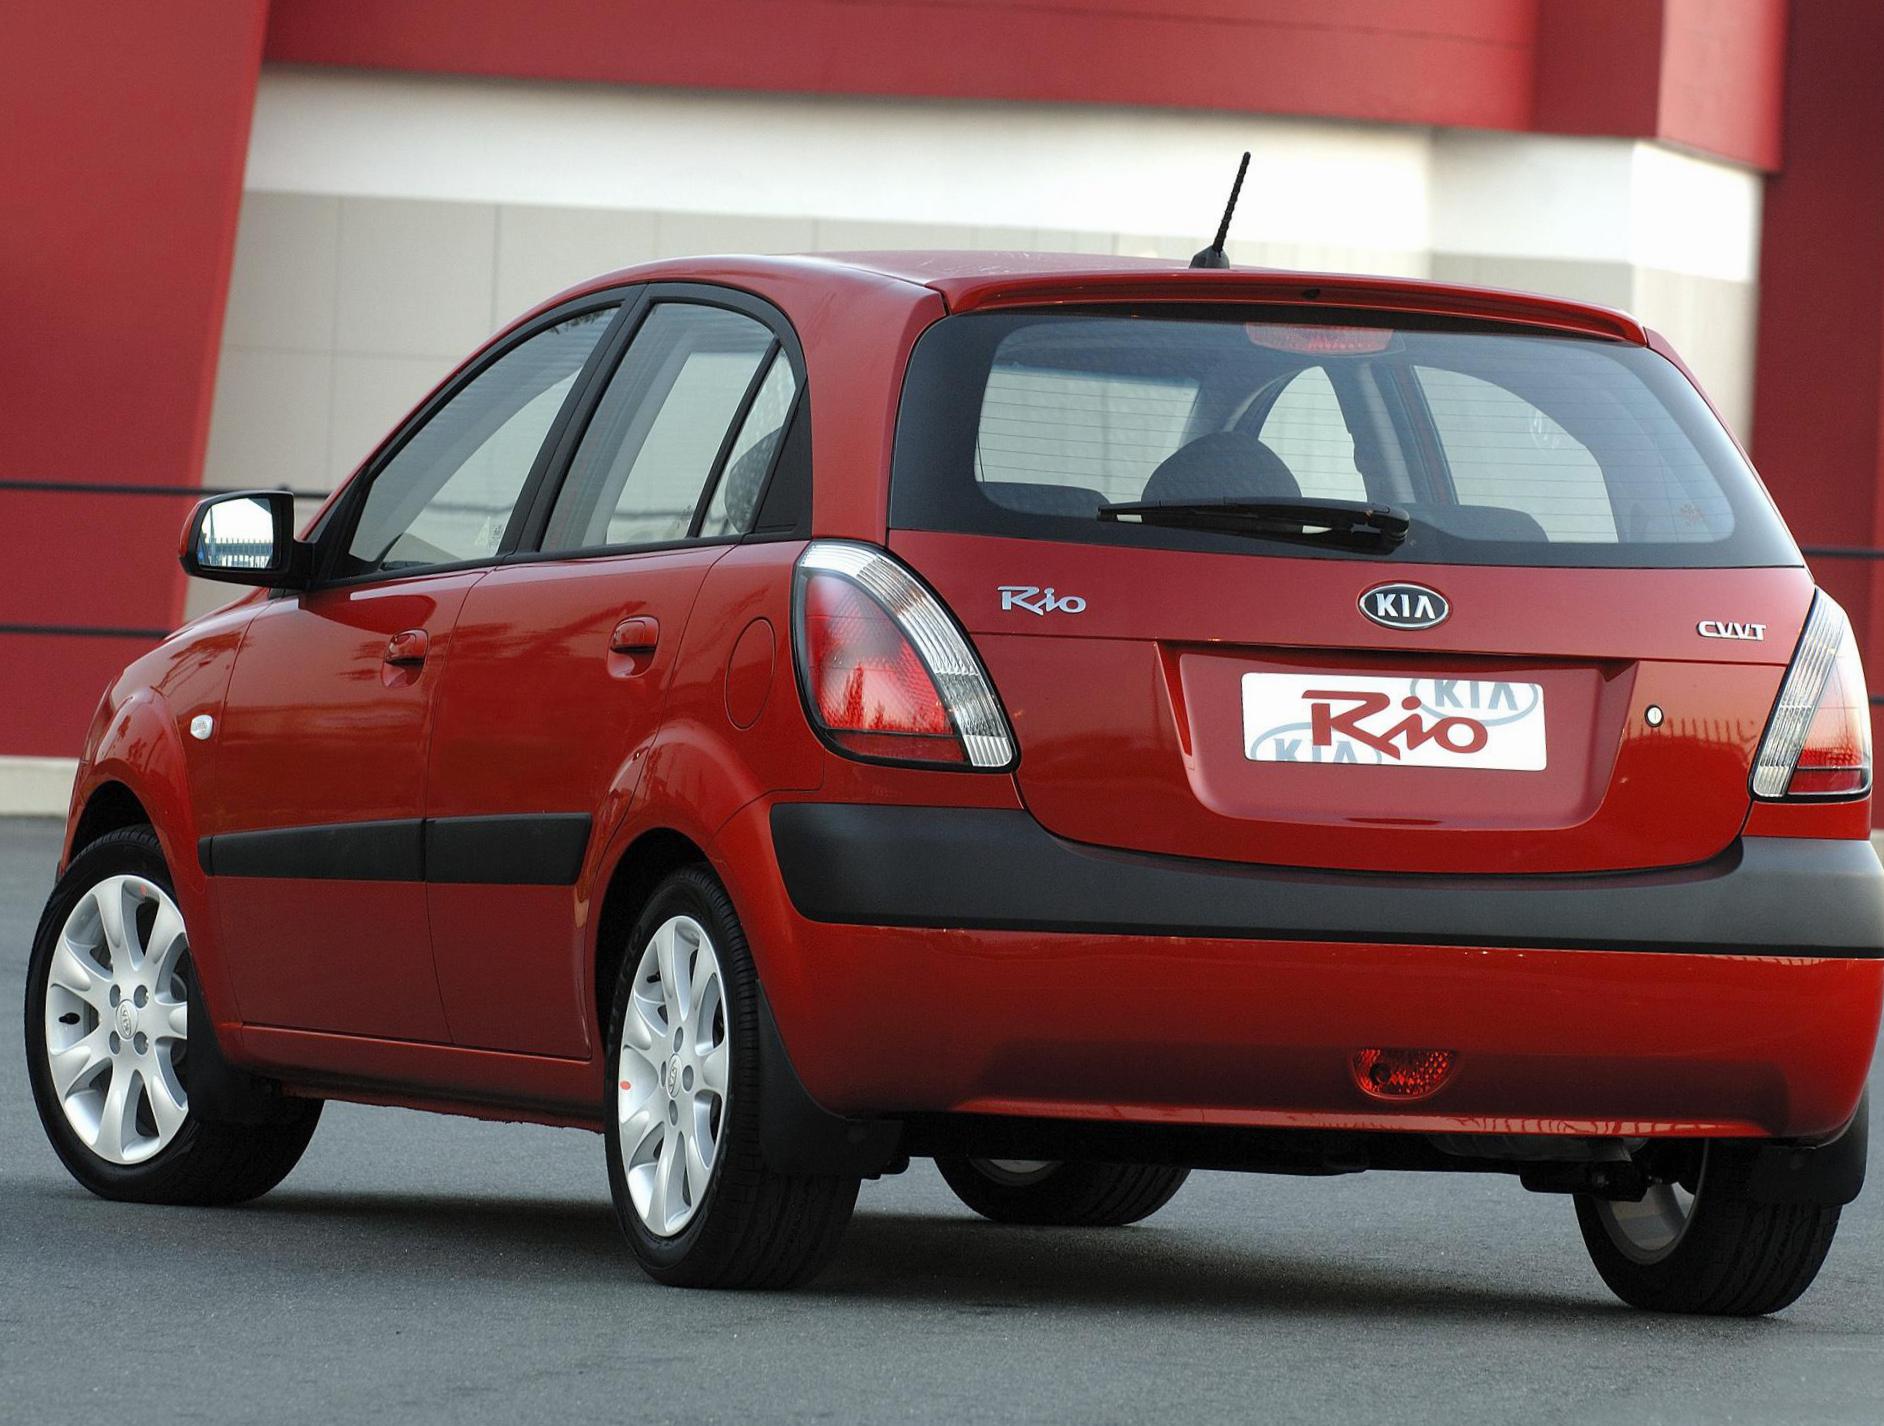 KIA Rio Hatchback model 2014